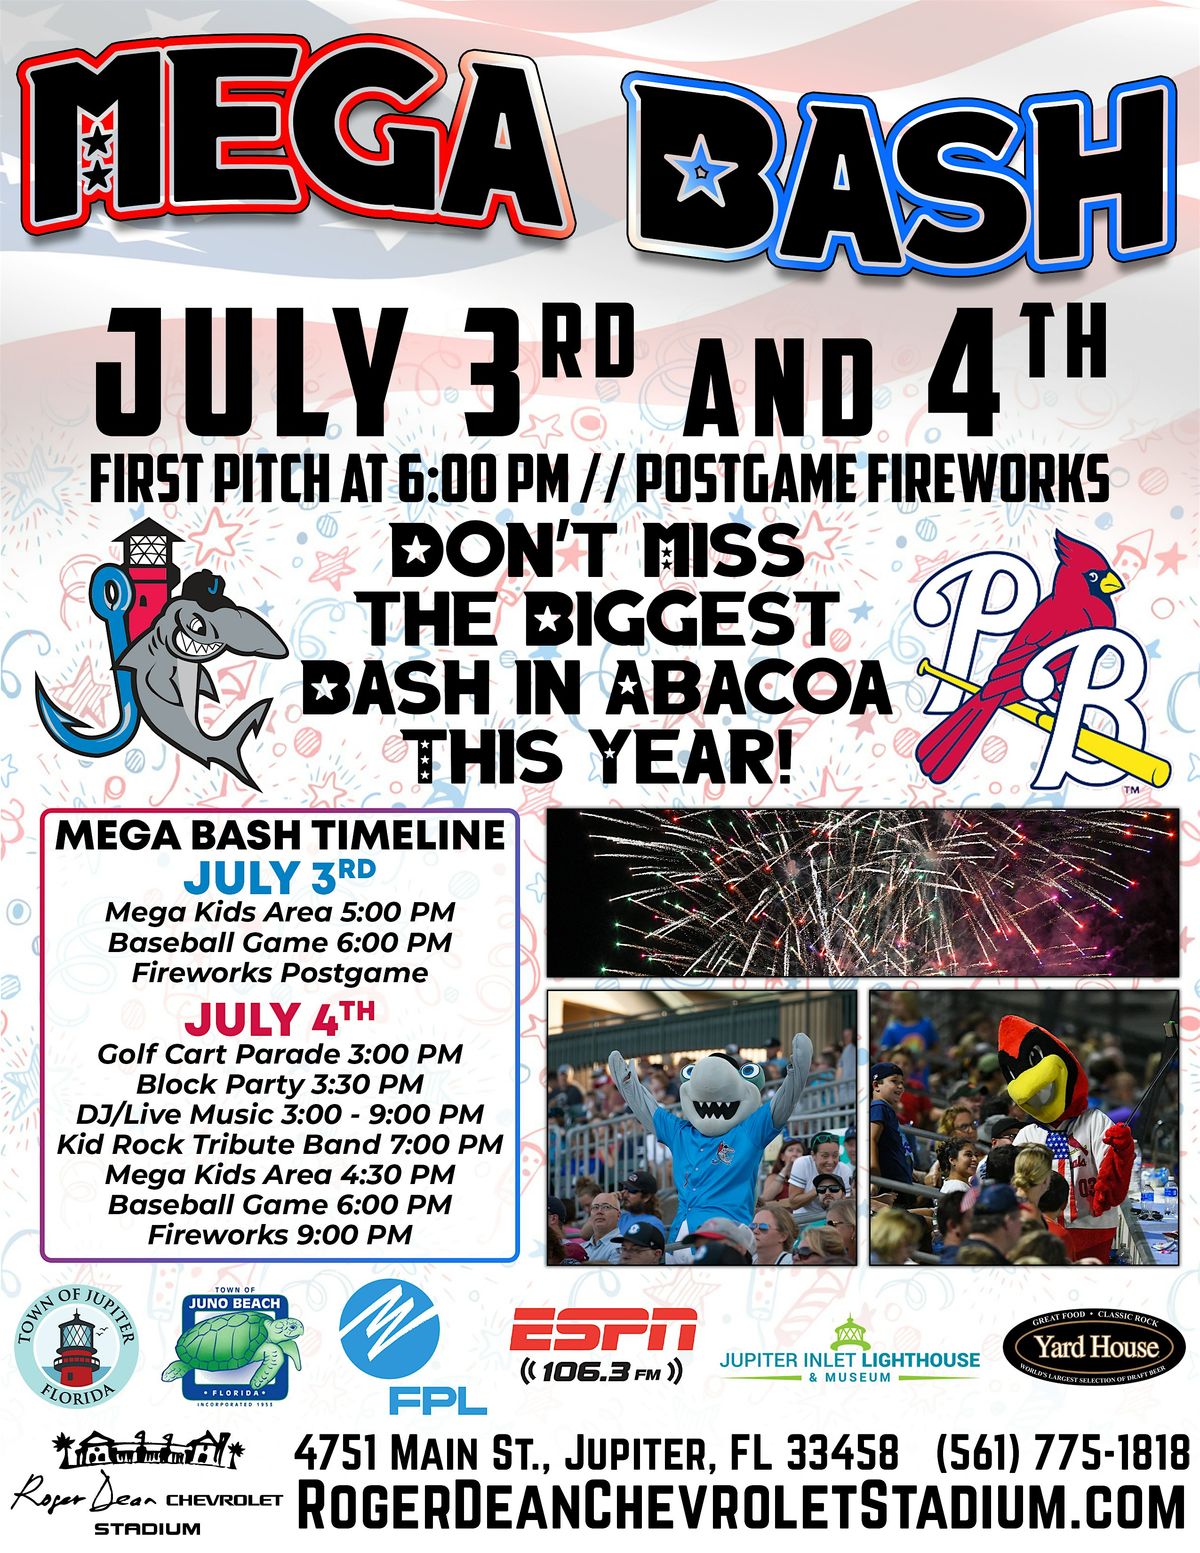 Megabash 3rd and 4th July at Roger Dean Chevrolet Stadium